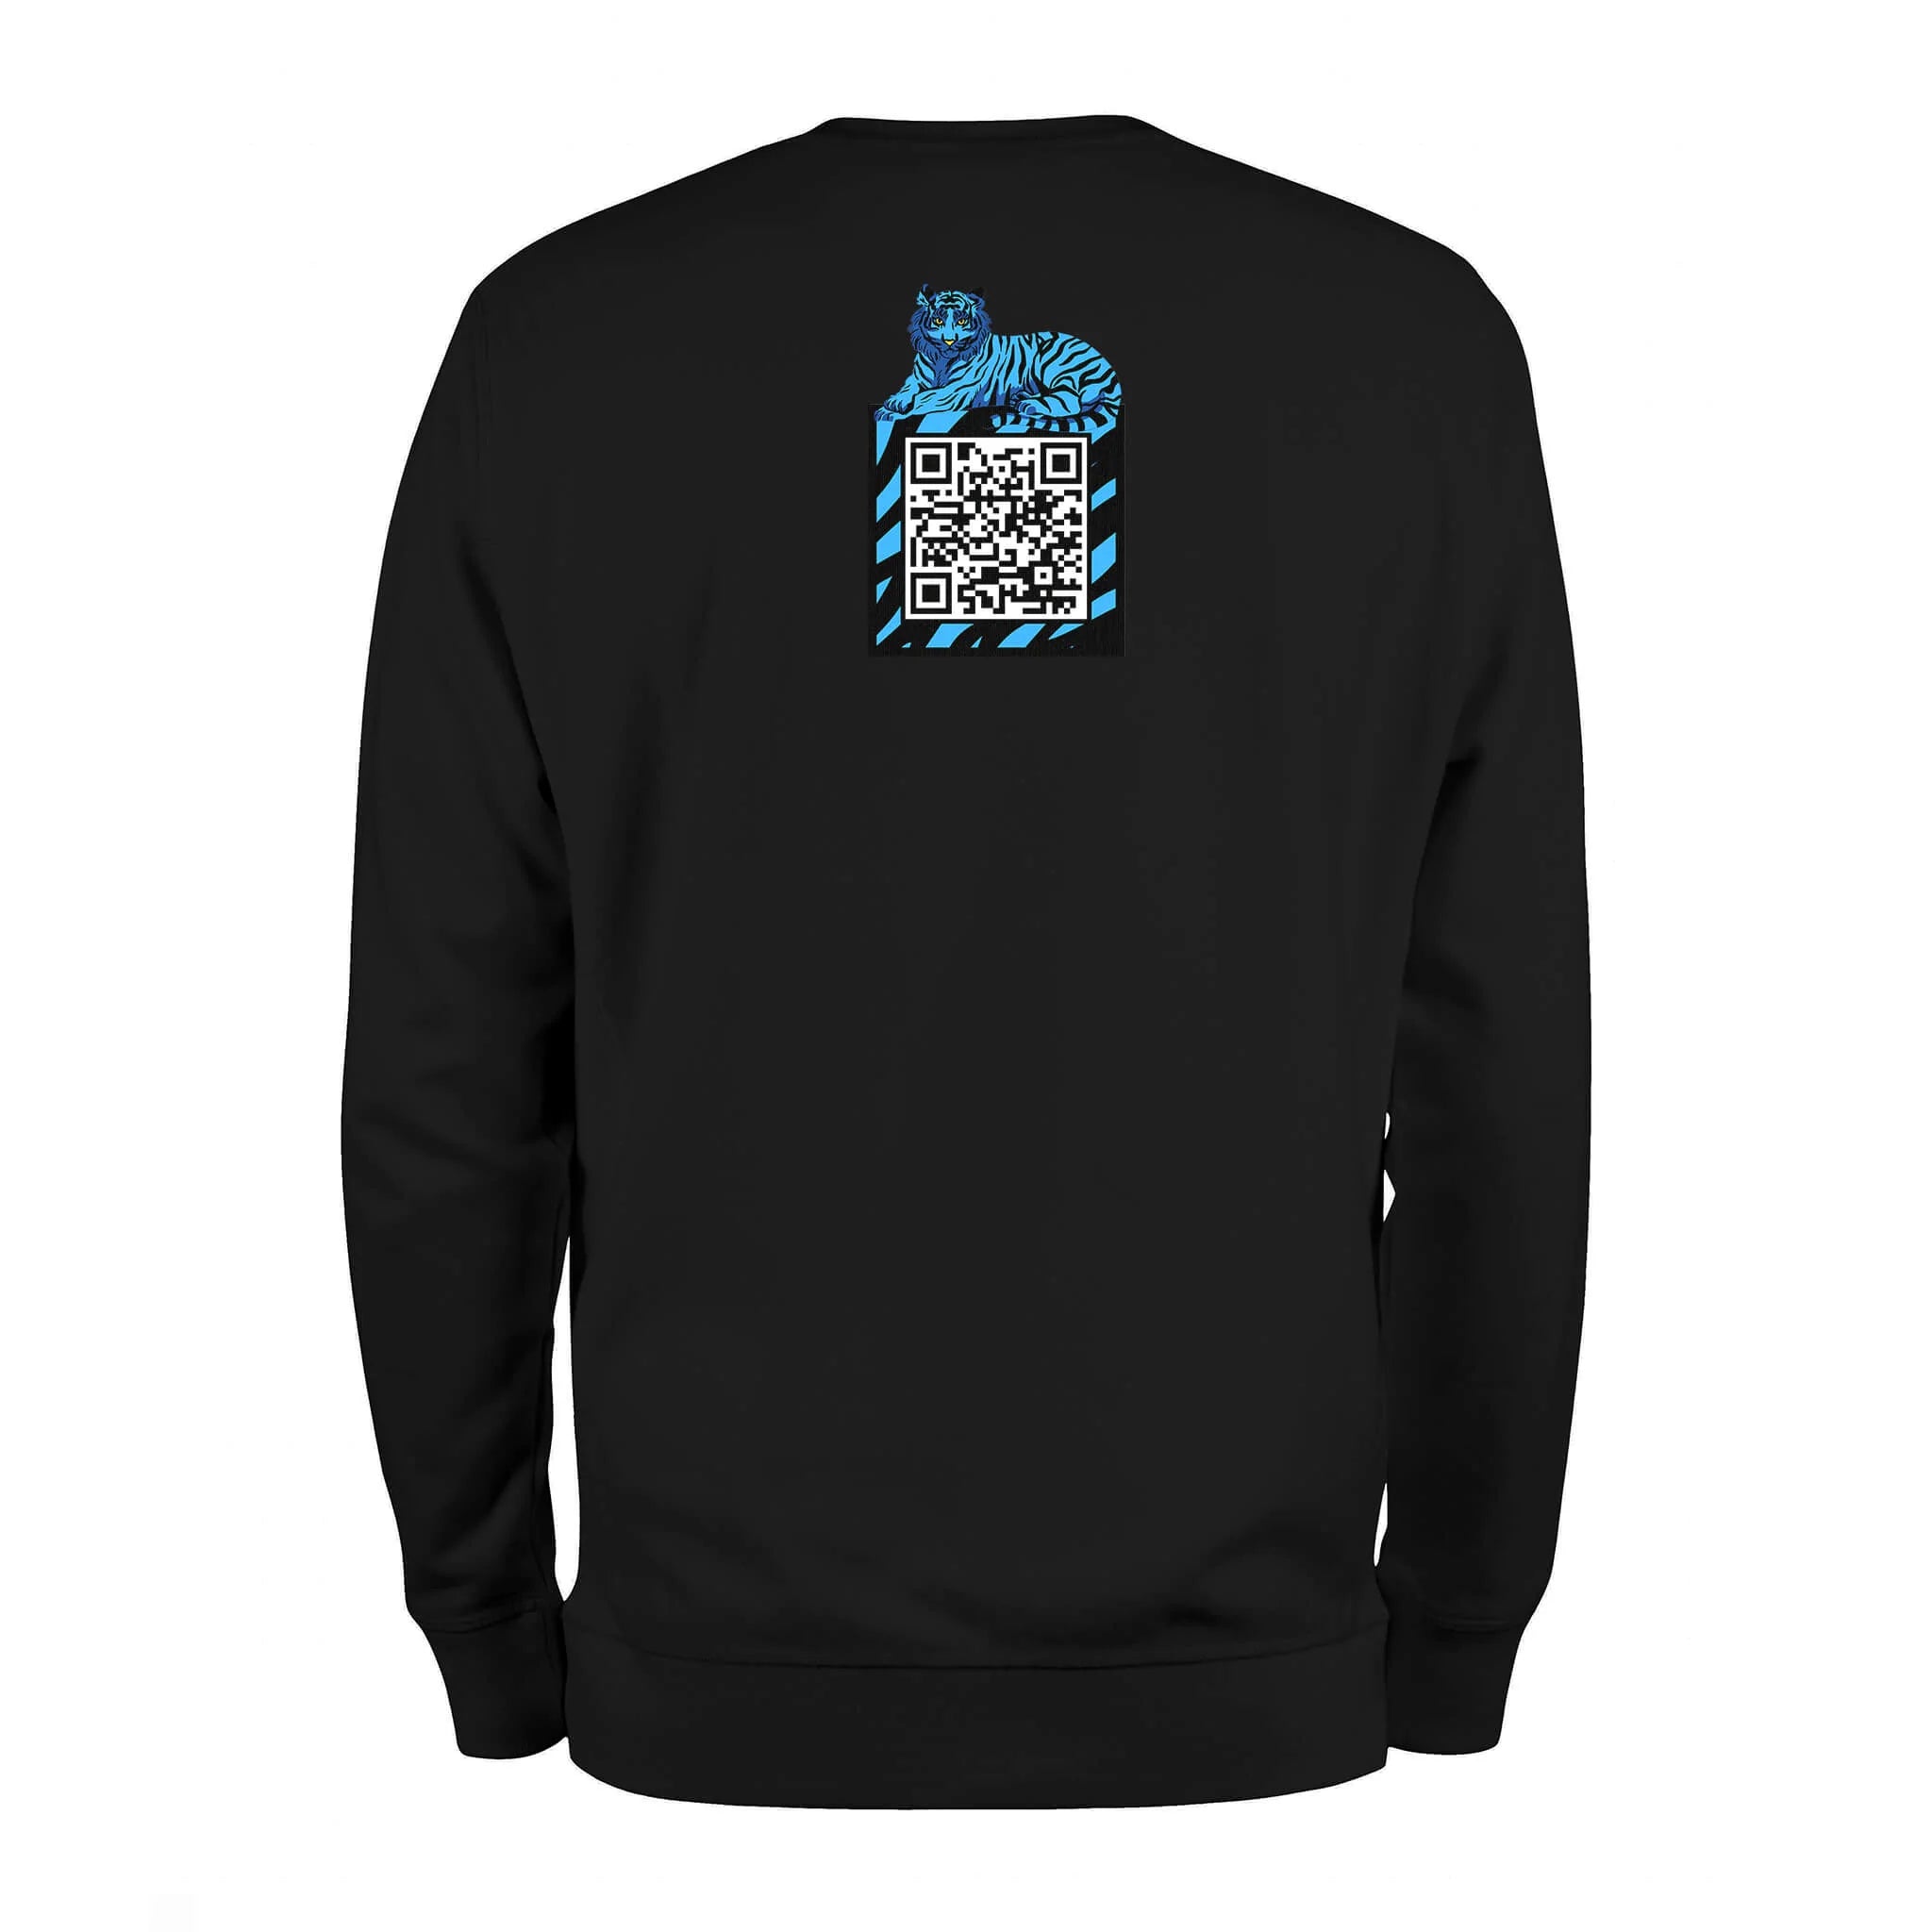 Black QR Sweatshirt from RESHRD Savannah collection with Back Black & Light Blue design